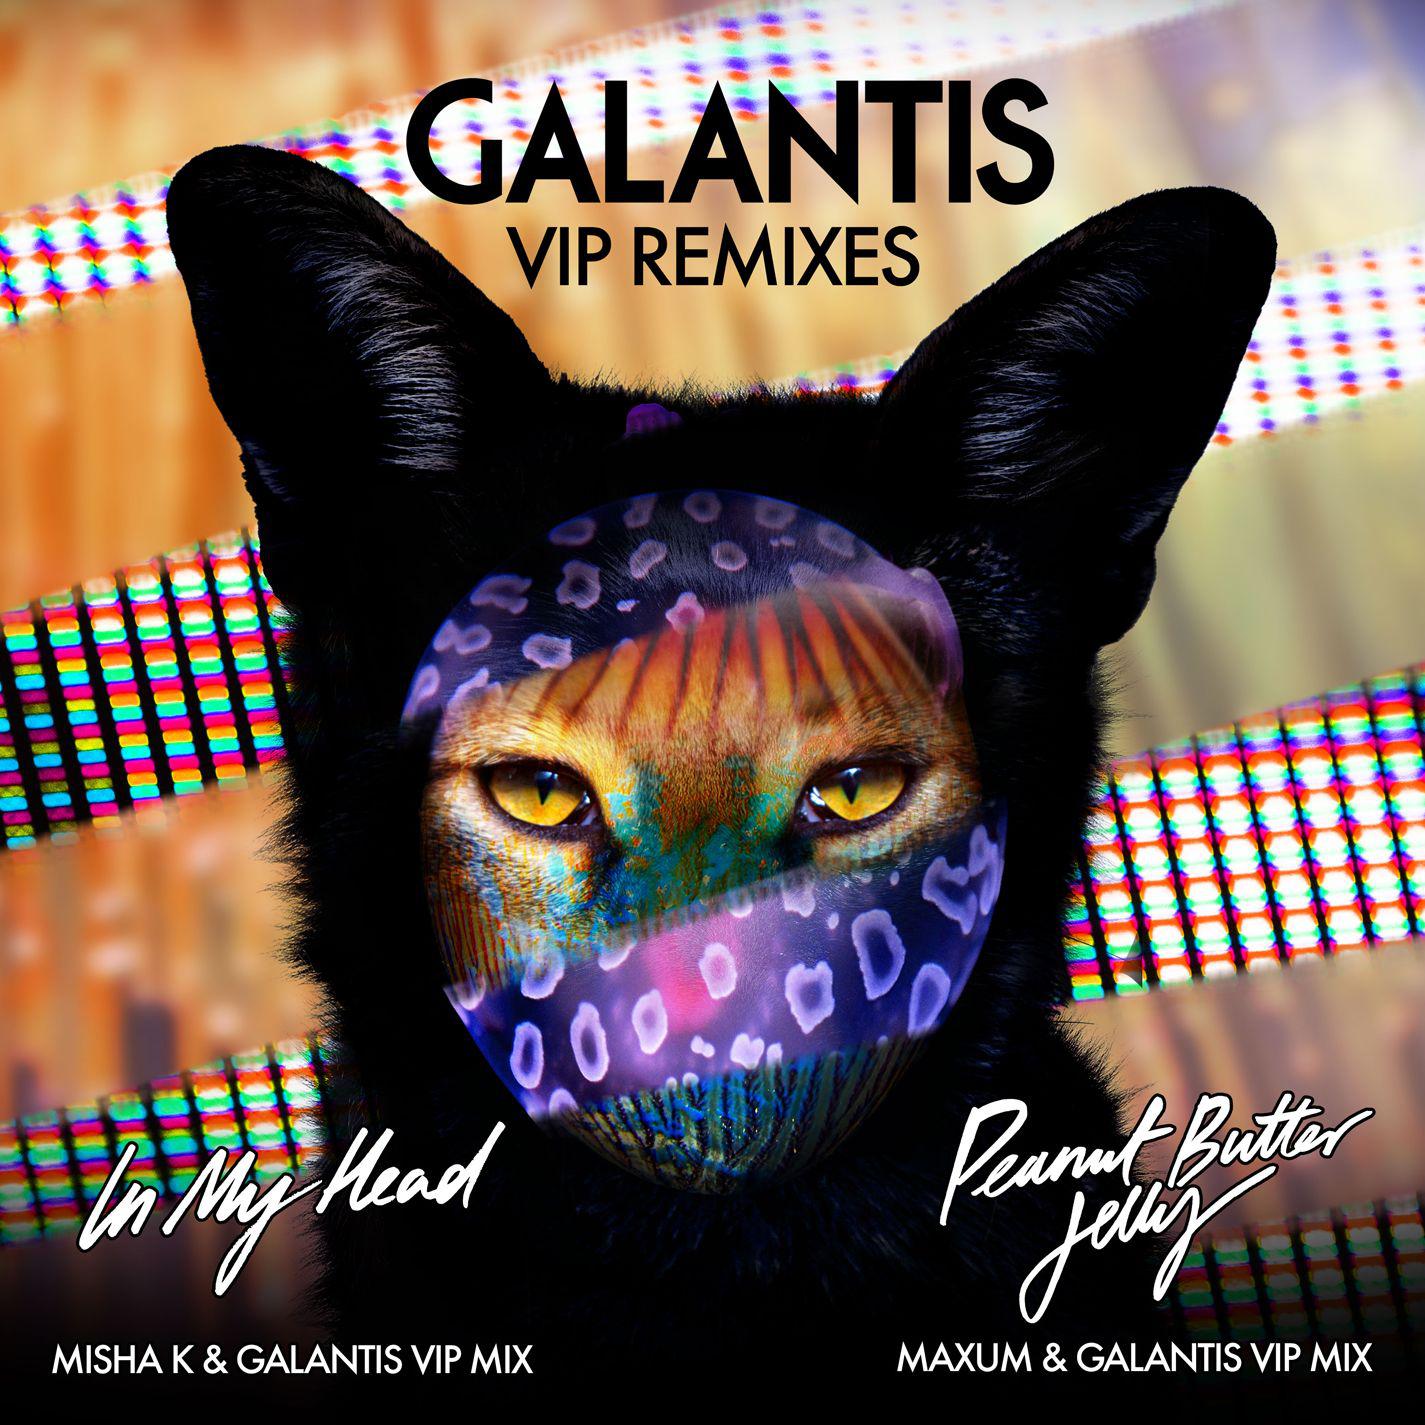 Peanut Butter Jelly (Maxum & Galantis VIP Mix)